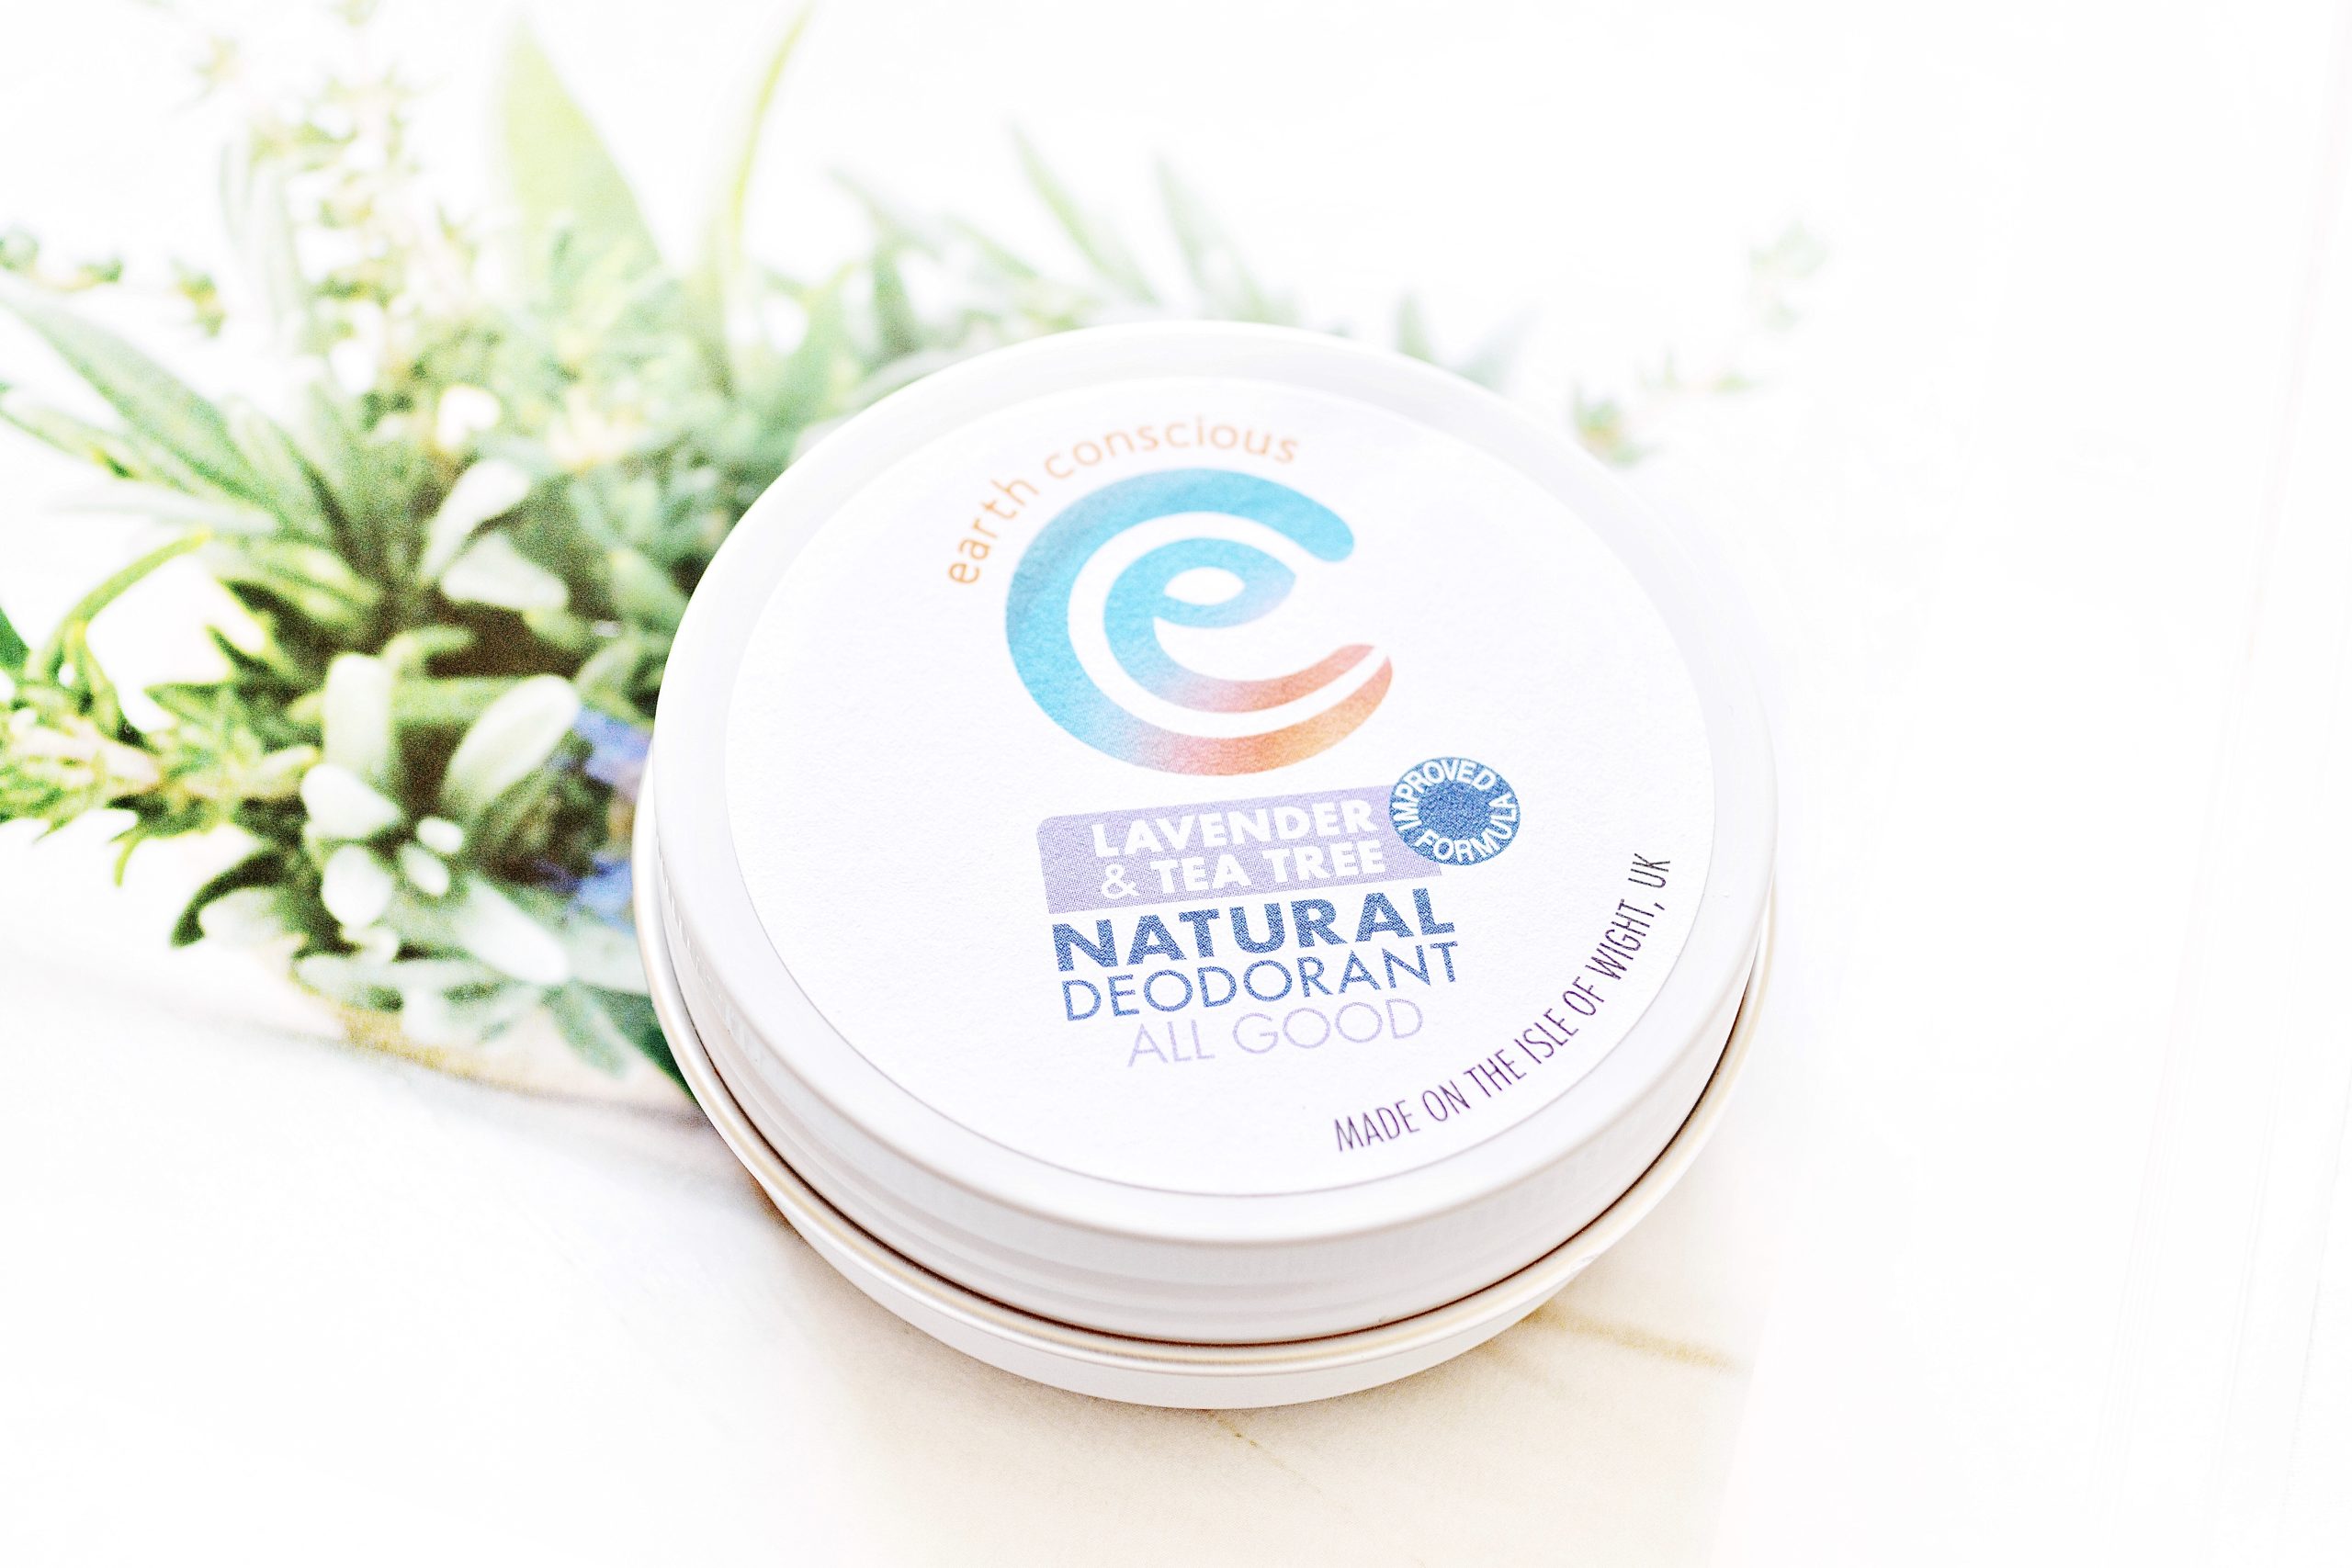 Earth Conscious Lavender & Tea Tree Natural Deodorant review